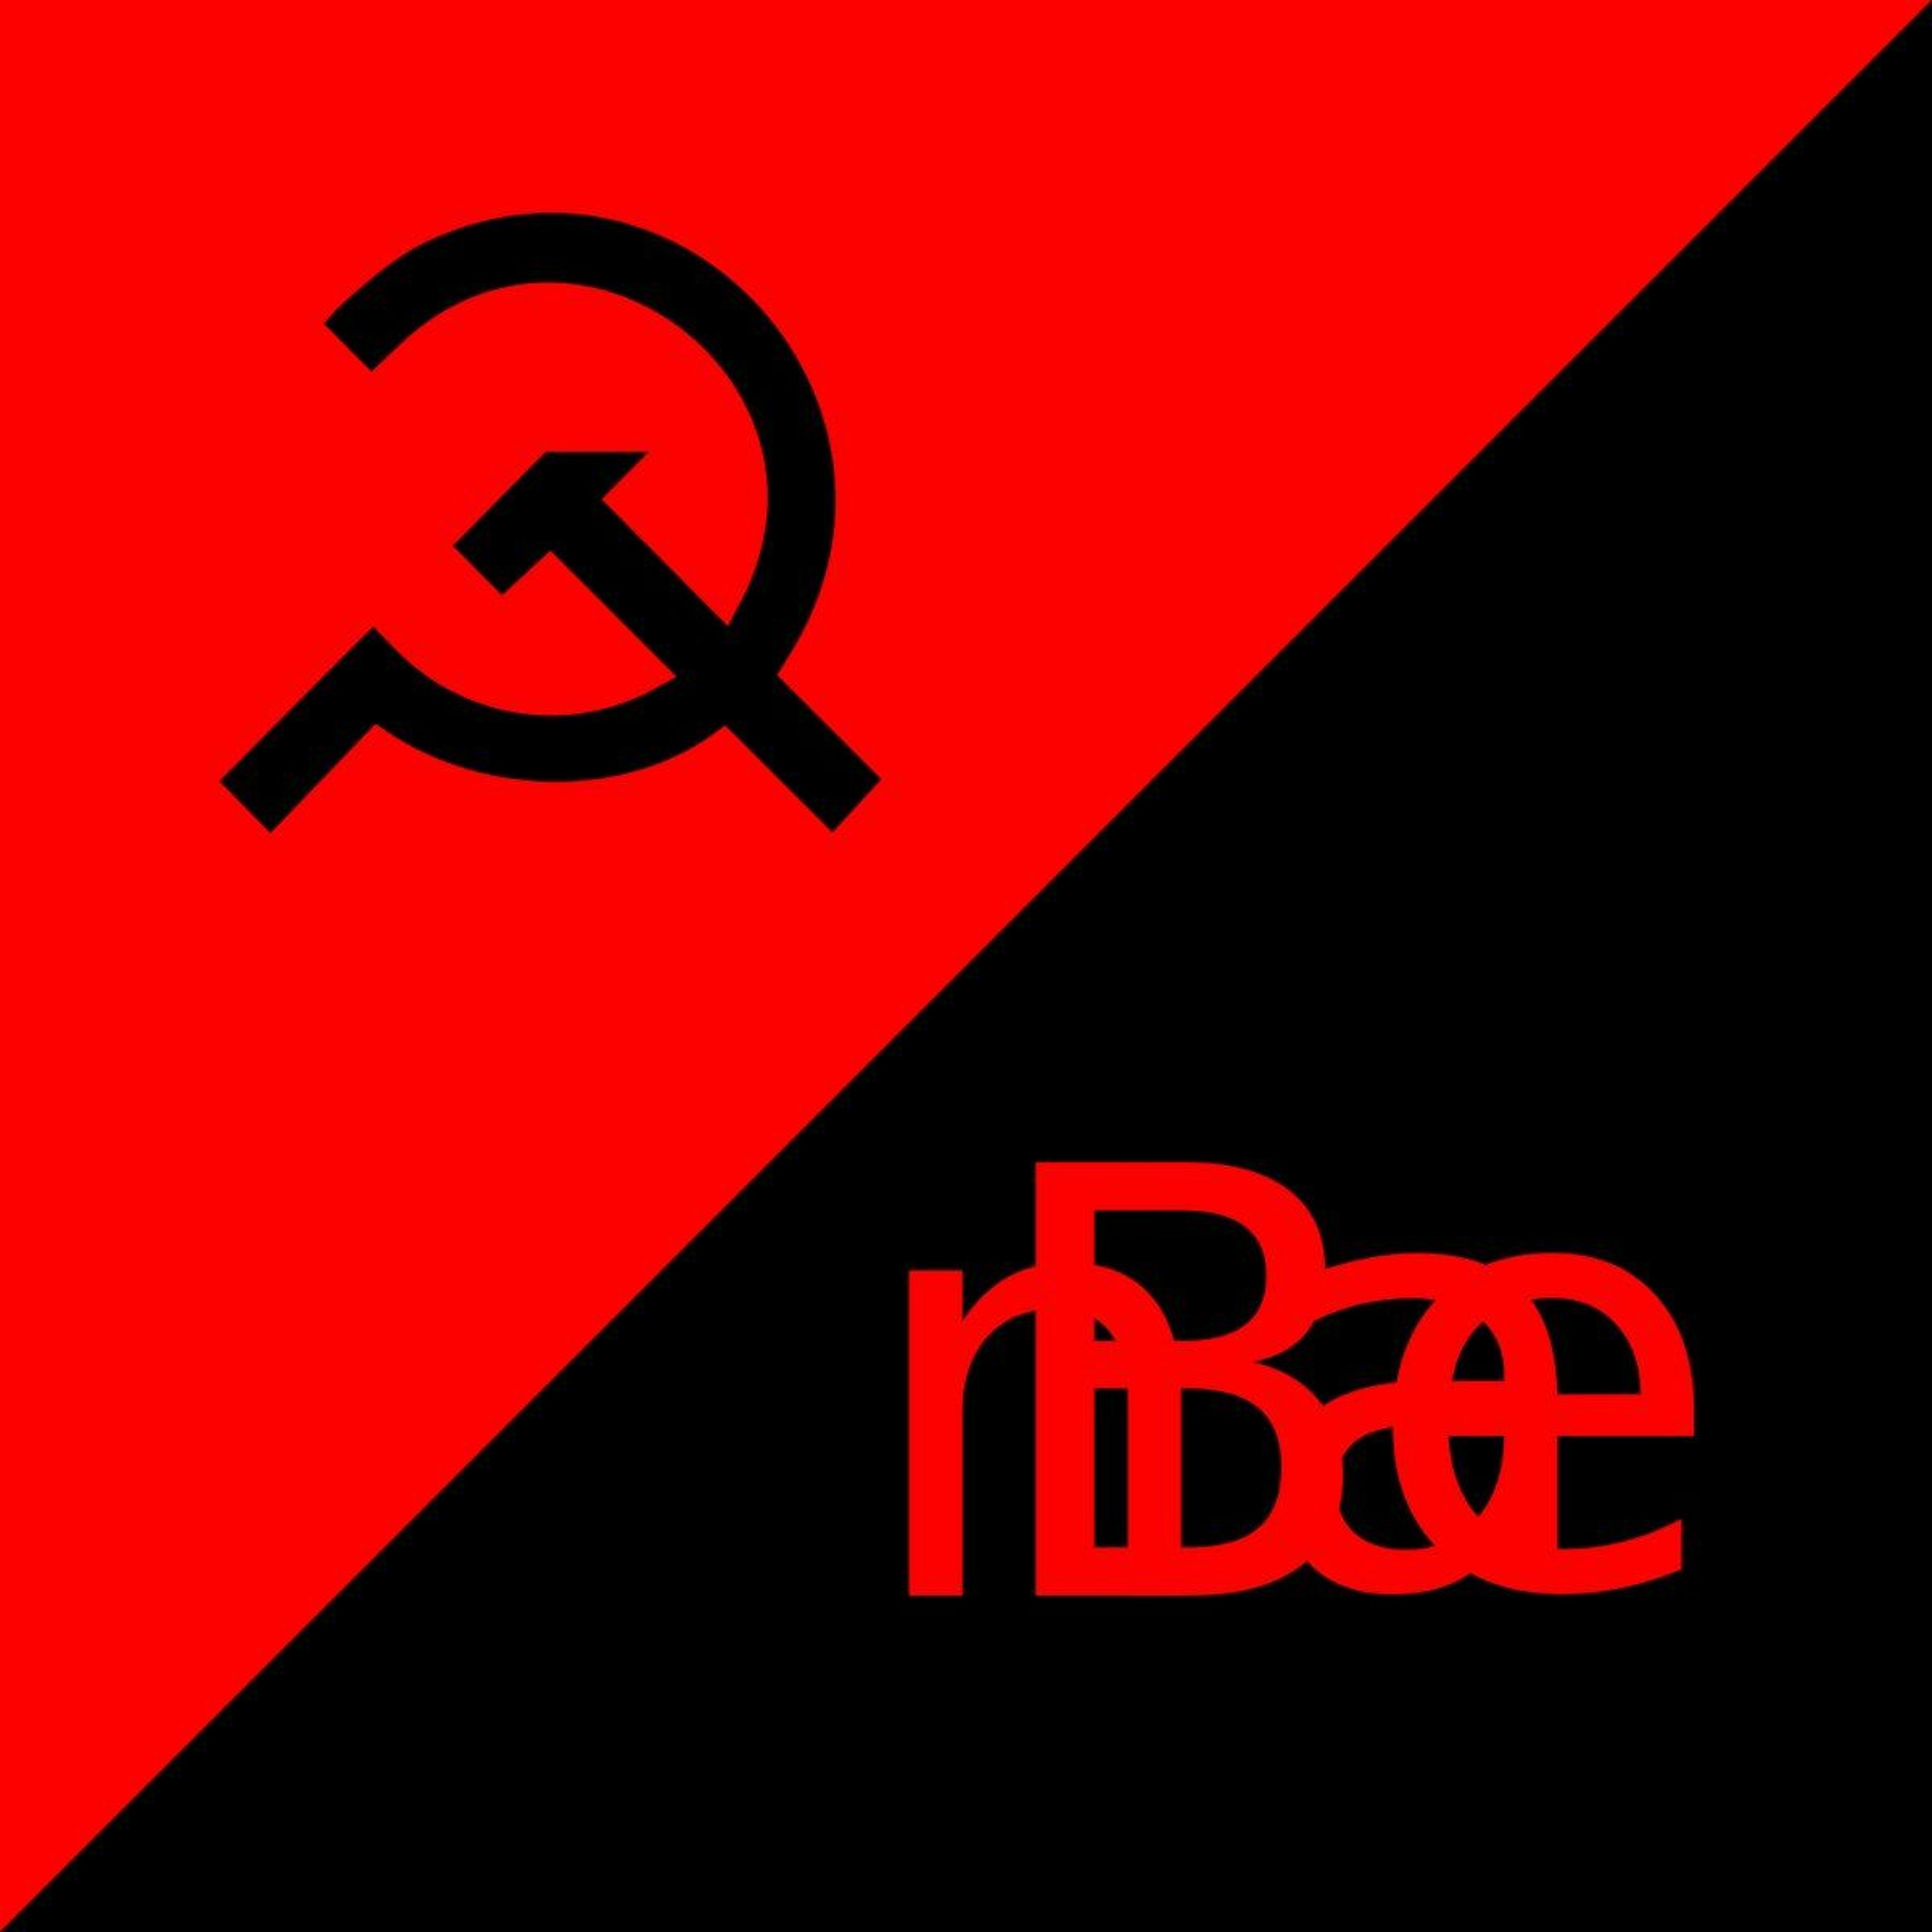 North Bae 015 - (City) Council Communism